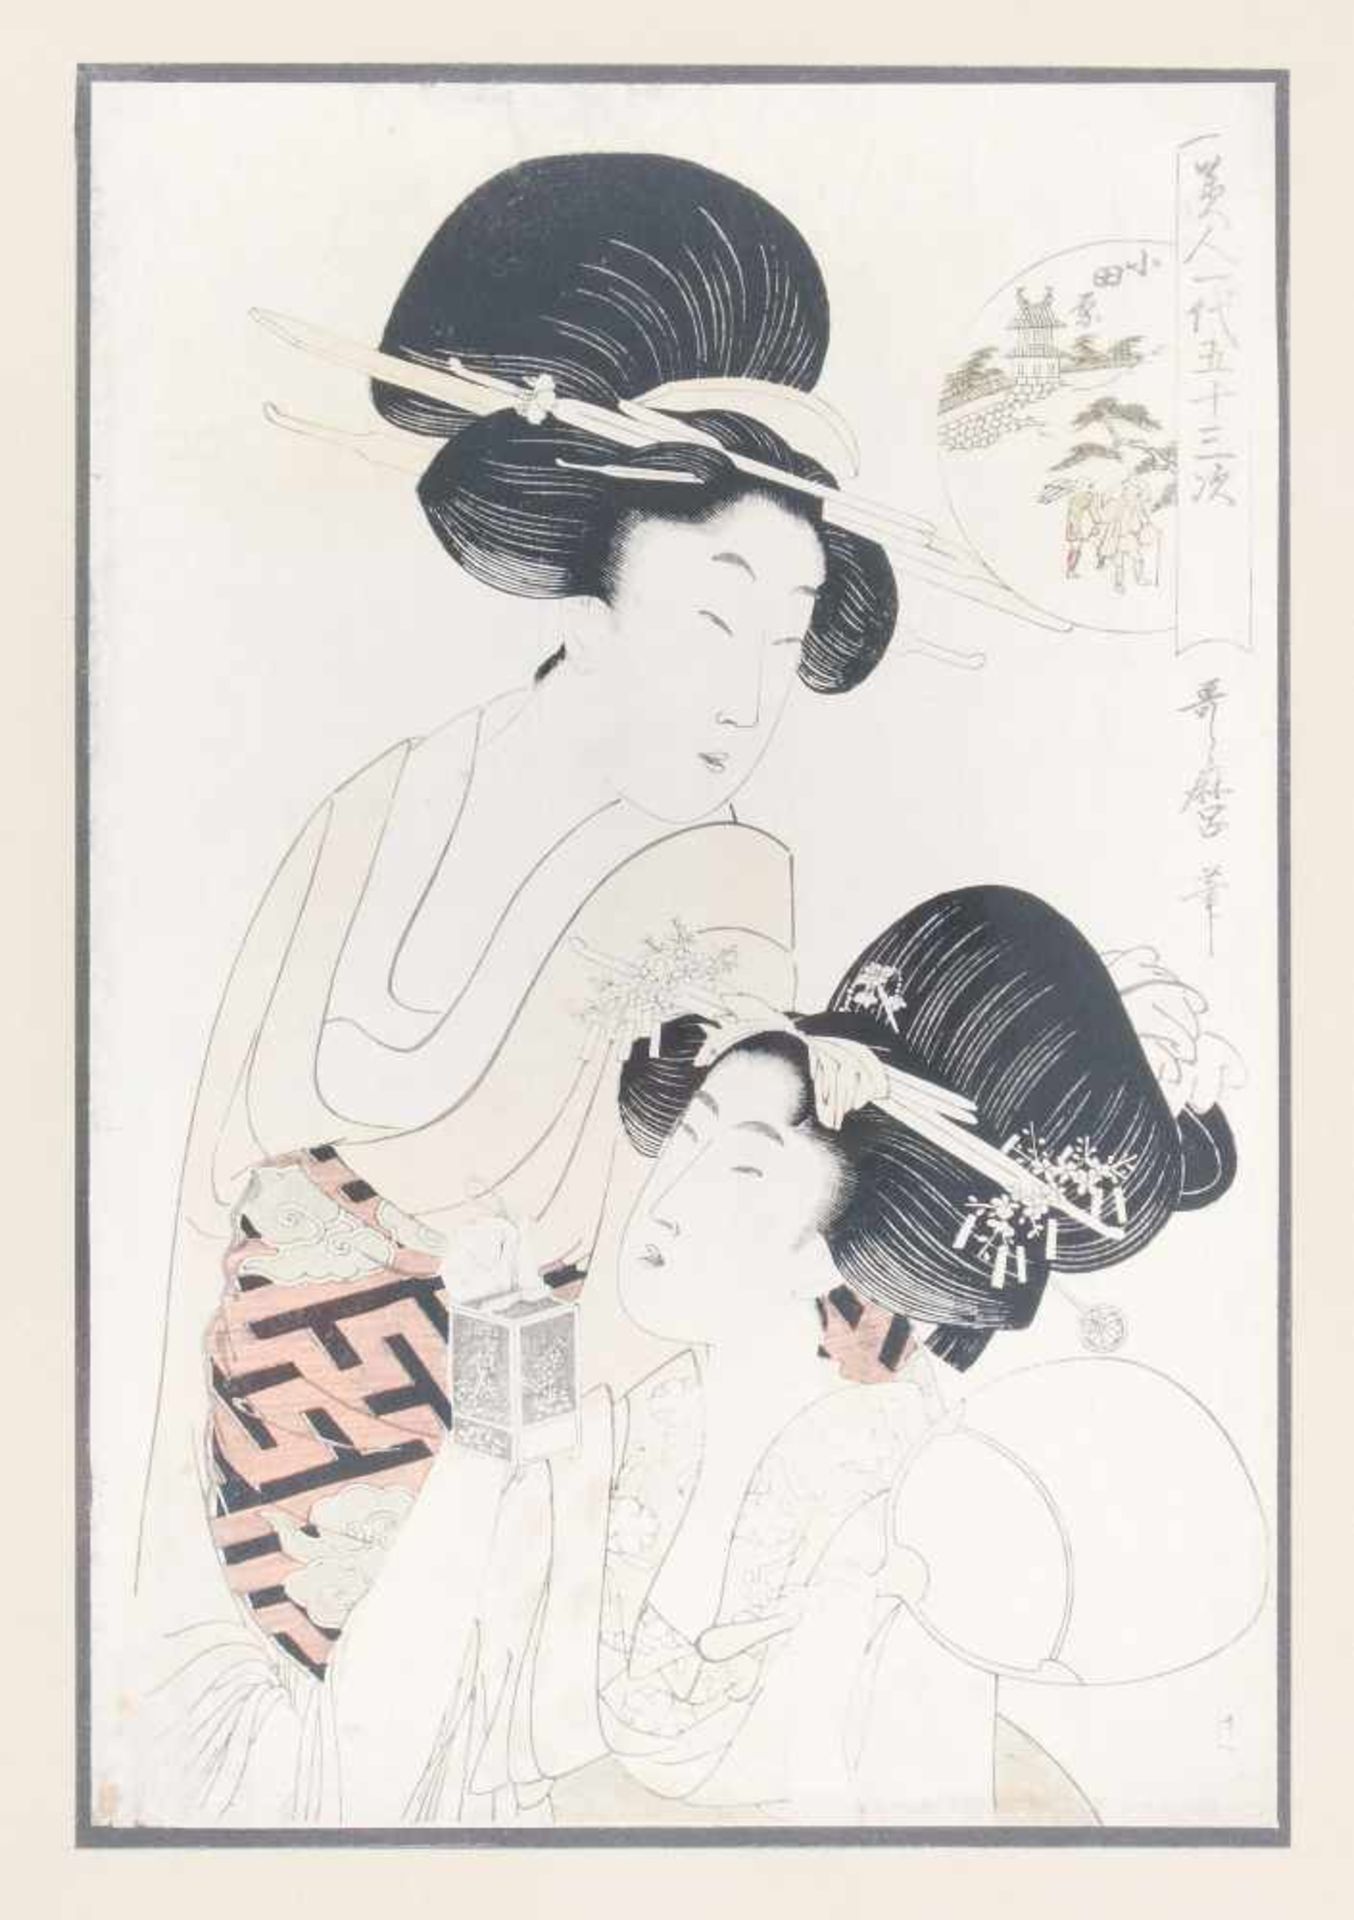 Lot 2 Blätter von Utamaro (1753–1806)Seirô Bijin nanatsume awase, Chôjiya Chôzan. Kurtisane mit - Bild 2 aus 3